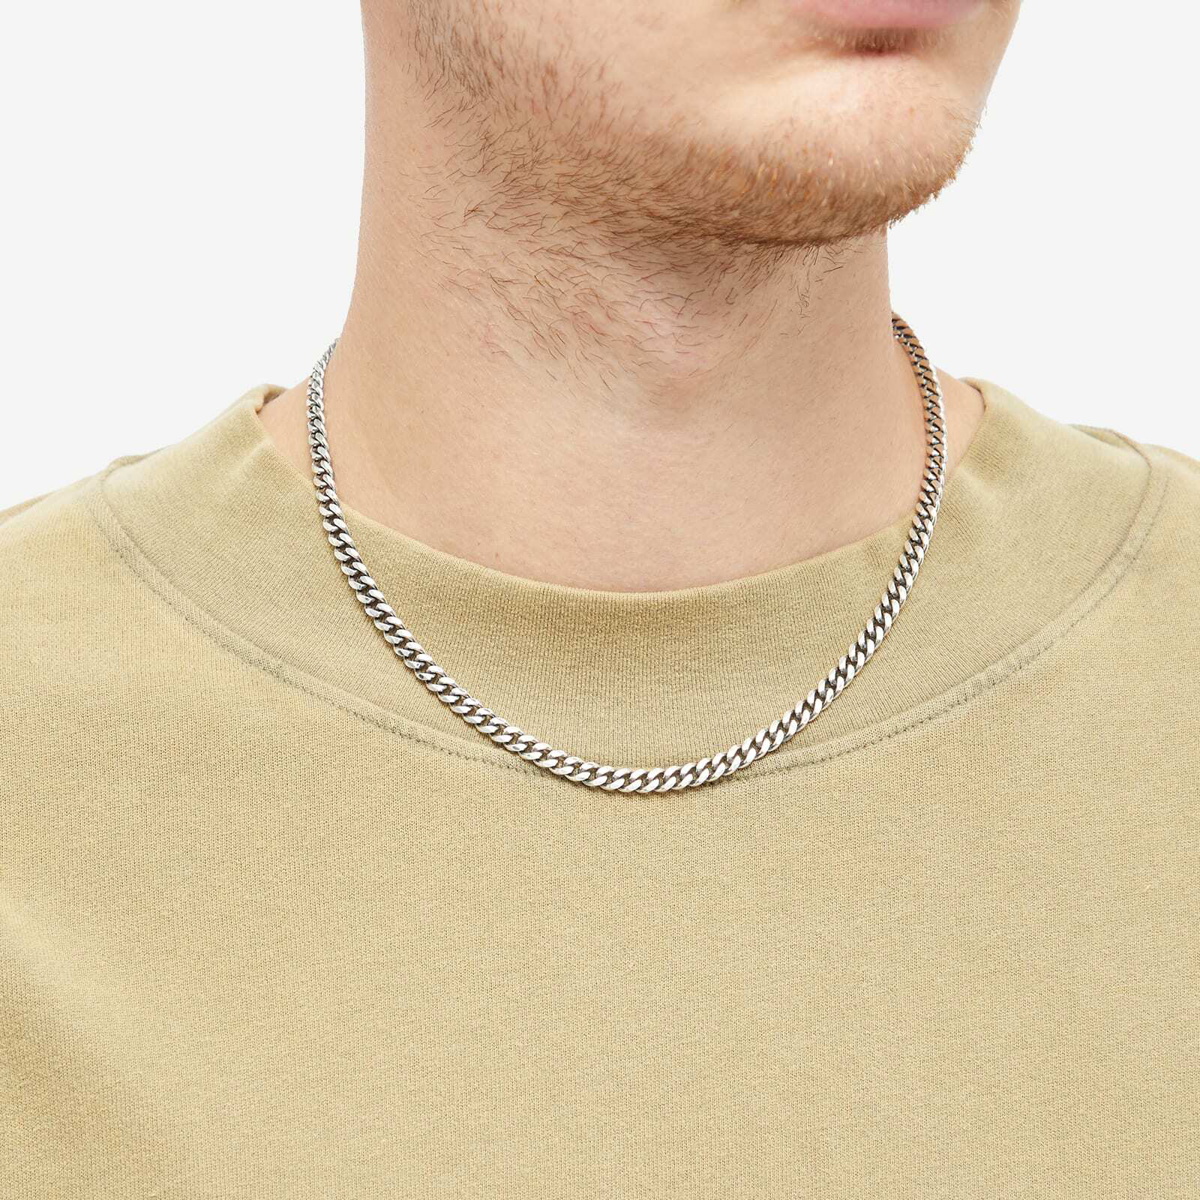 Serge DeNimes sterling silver statement neckchain with dragon pendant | ASOS